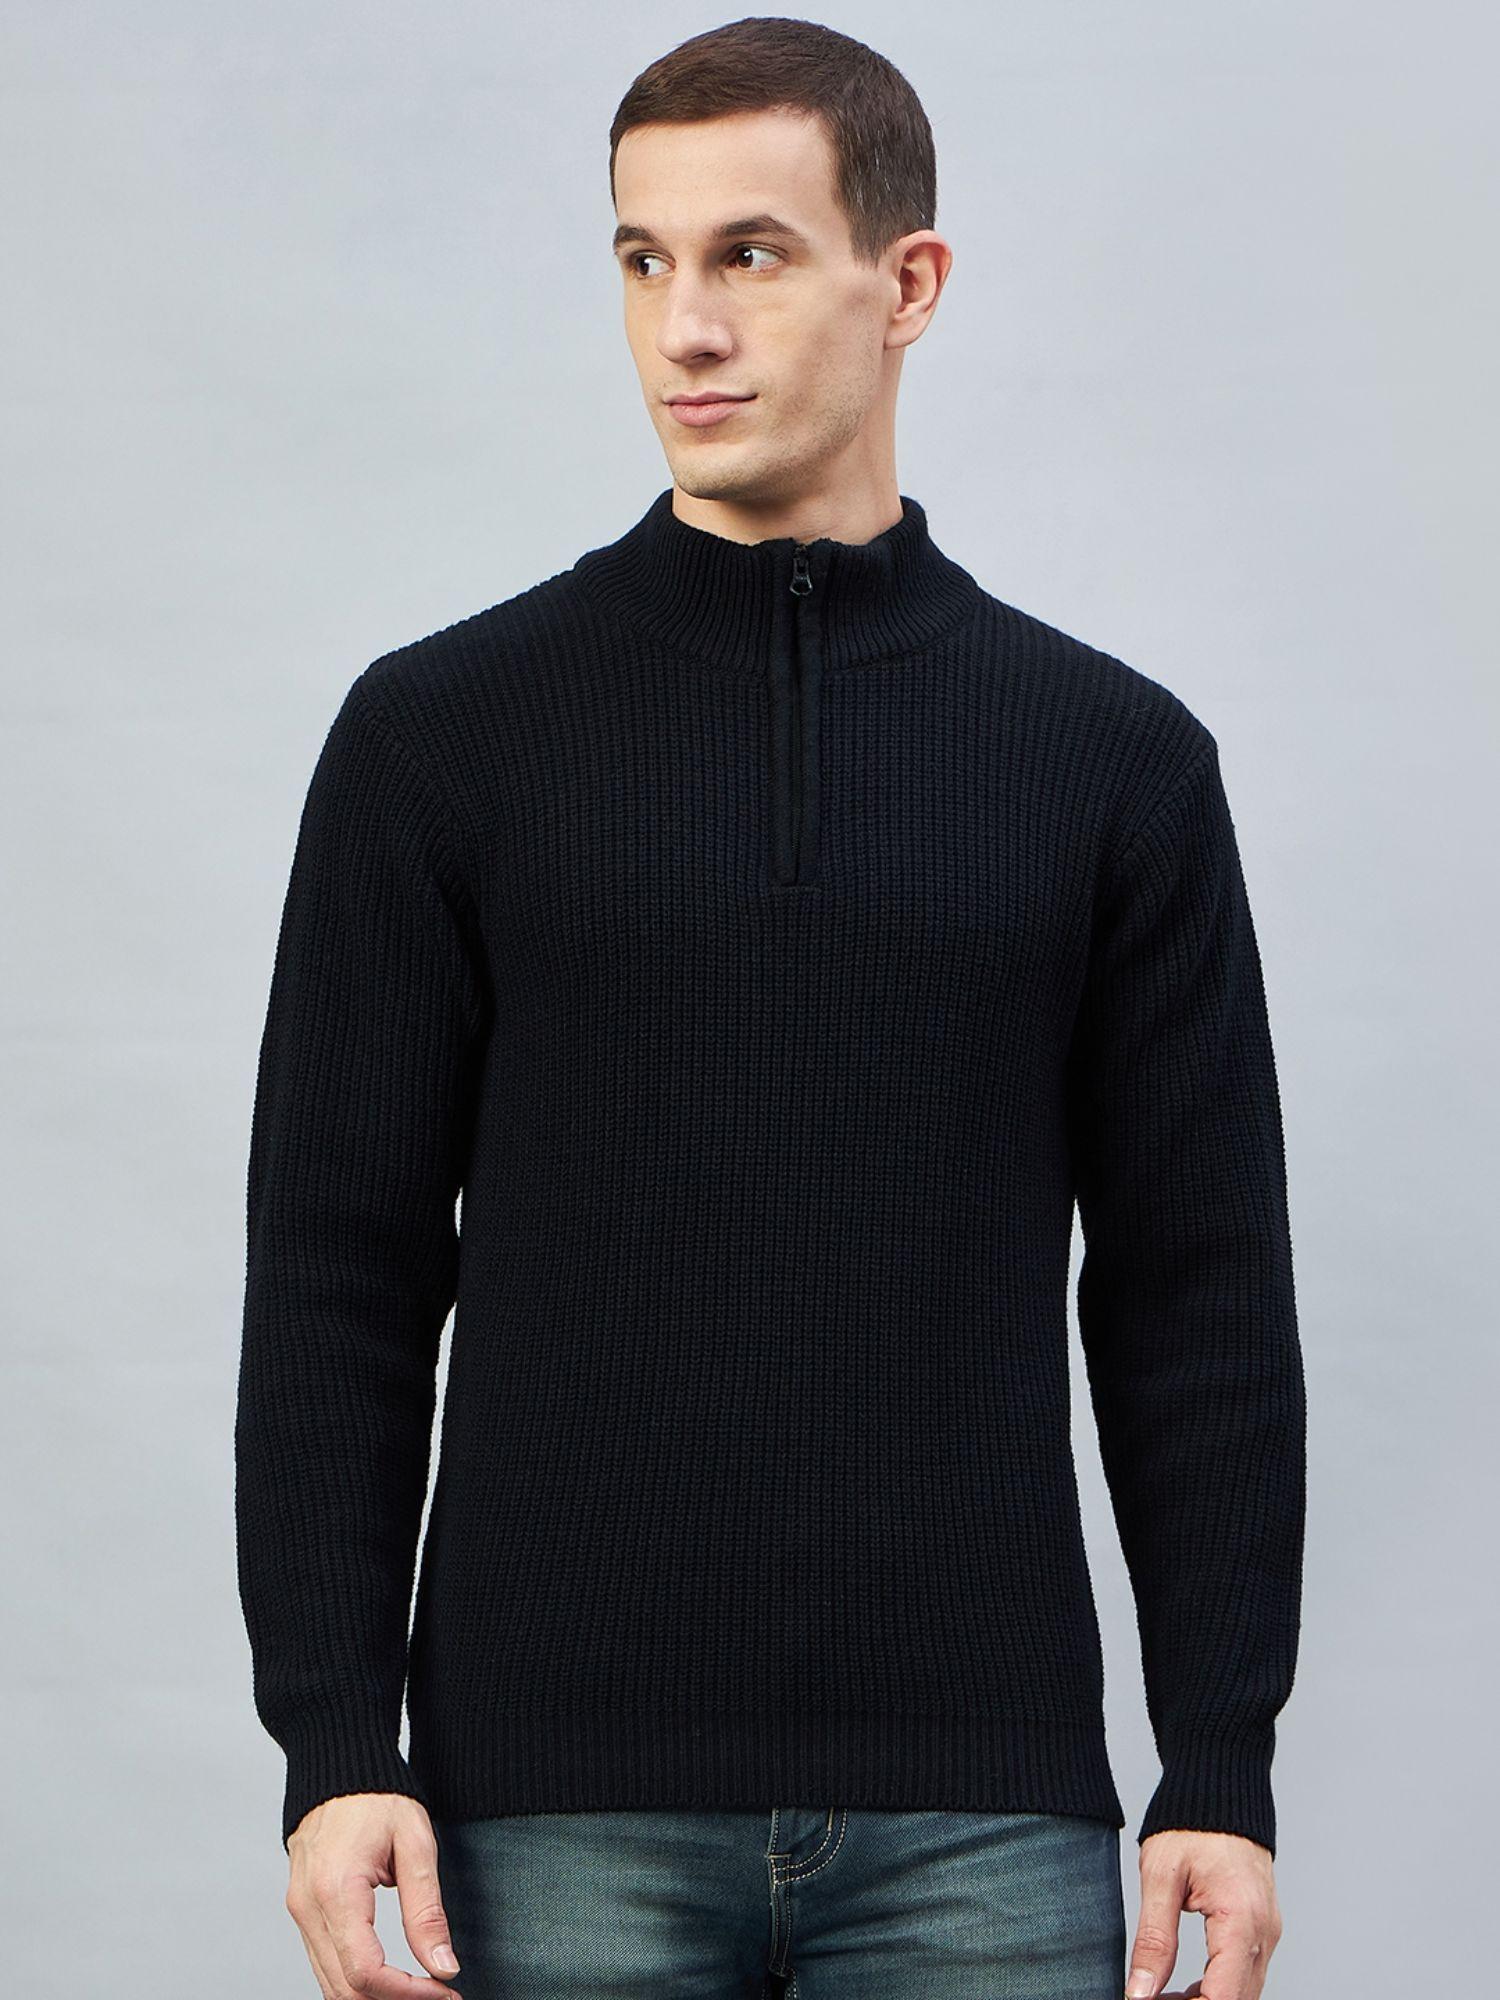 black-high-neck-sweater